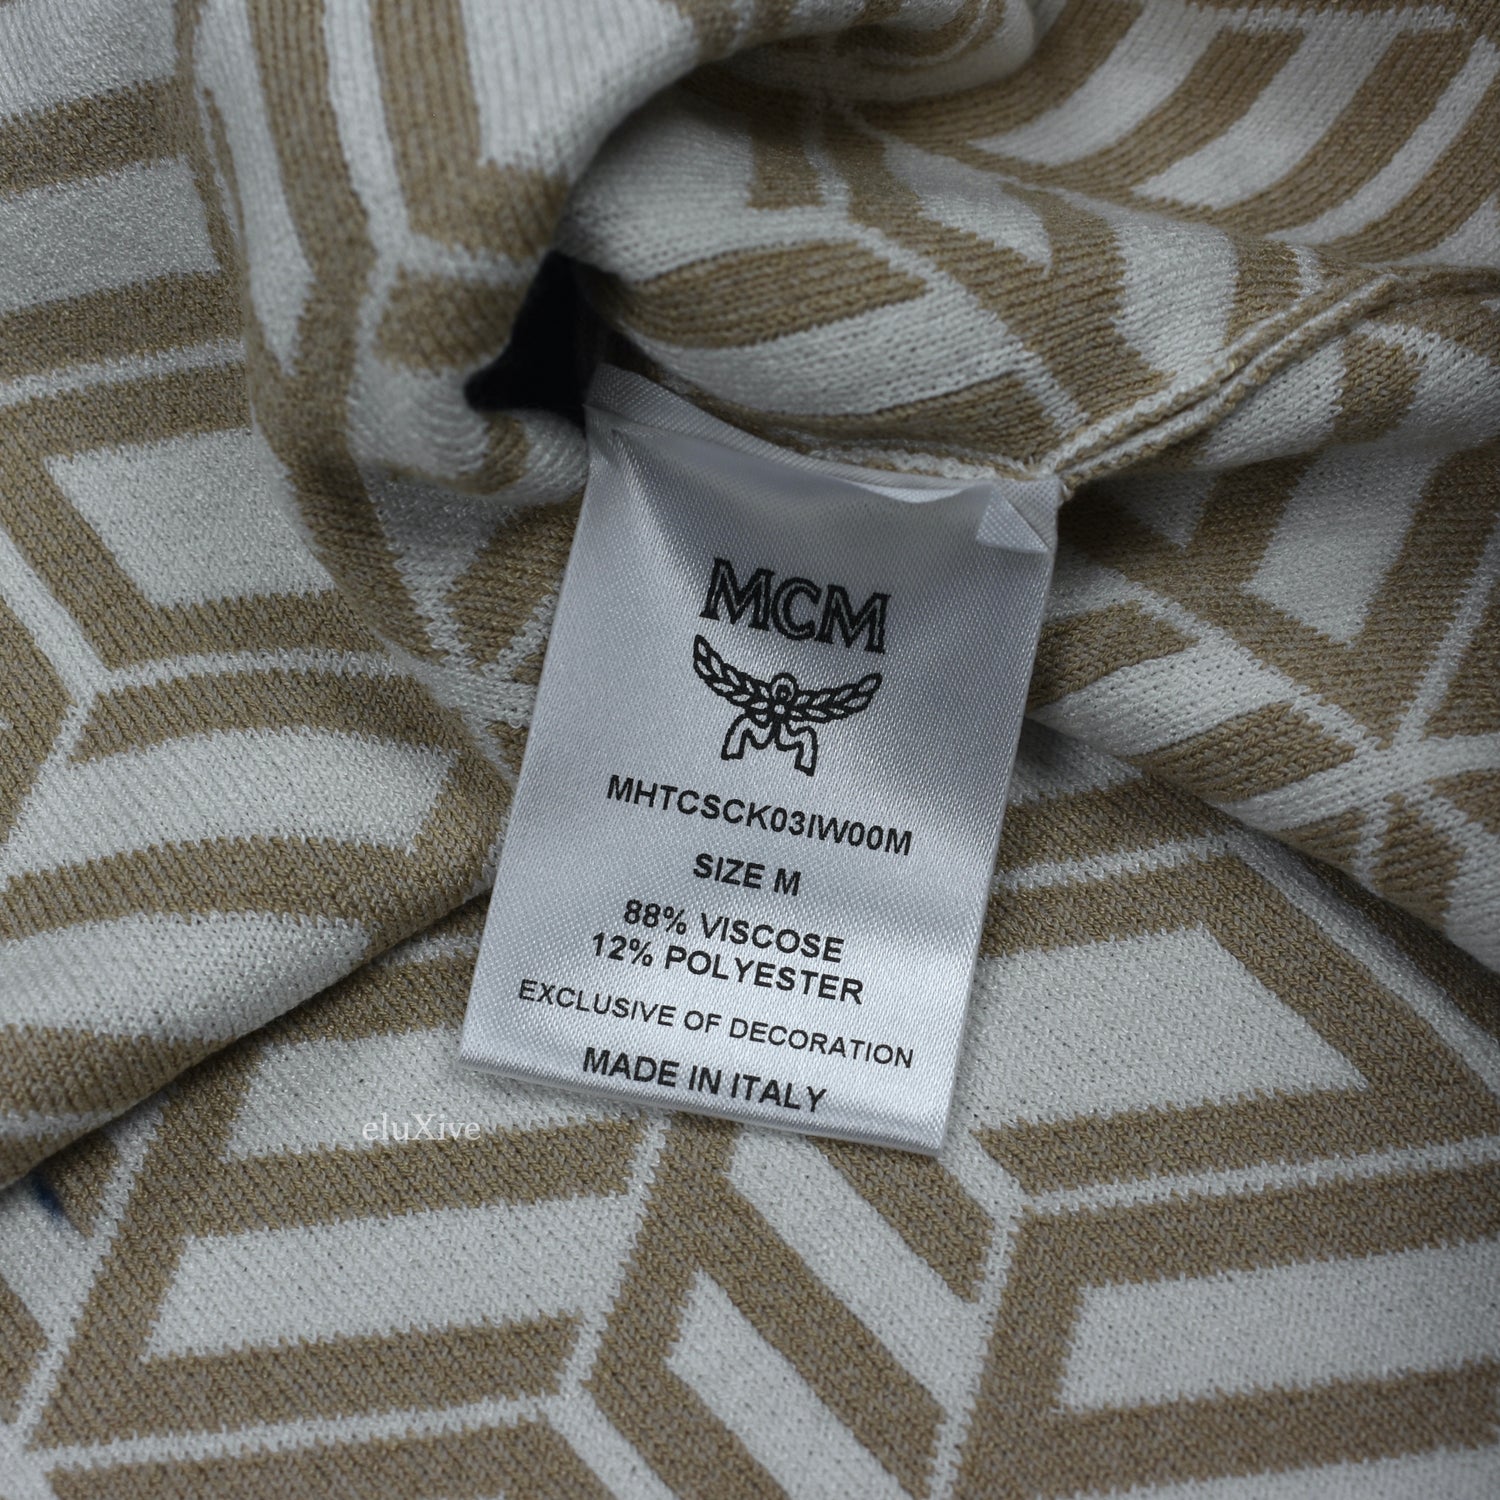 MCM - Cubic Monogram Logo Knit Polo Shirt (Navy) – eluXive